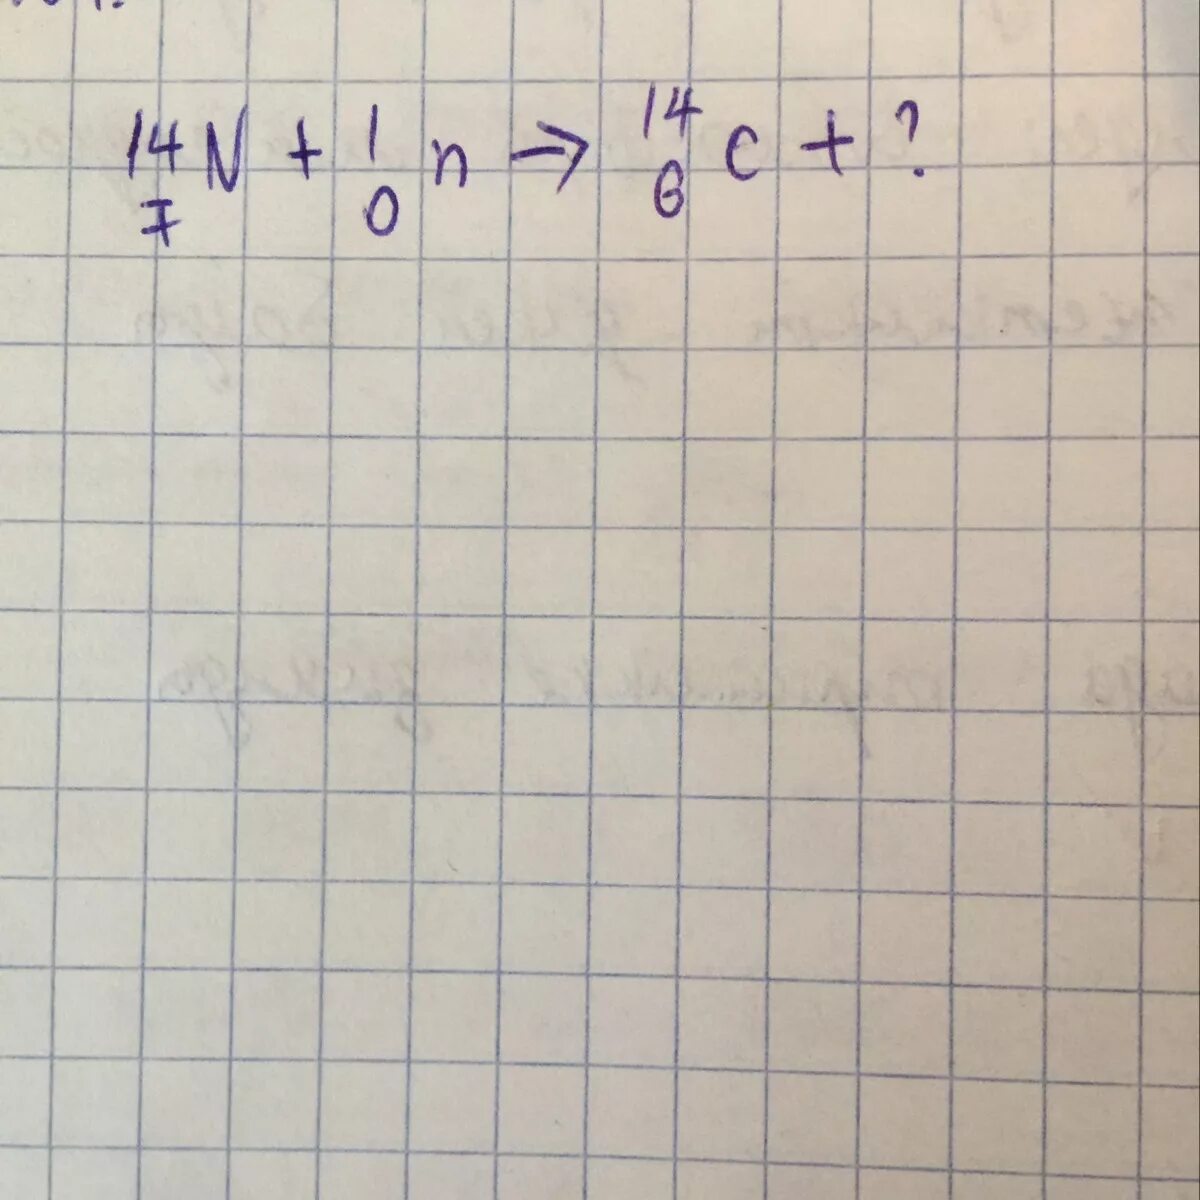 7 14 15 ответ. 147n + ? → 146c + 11p. 14 7 N.